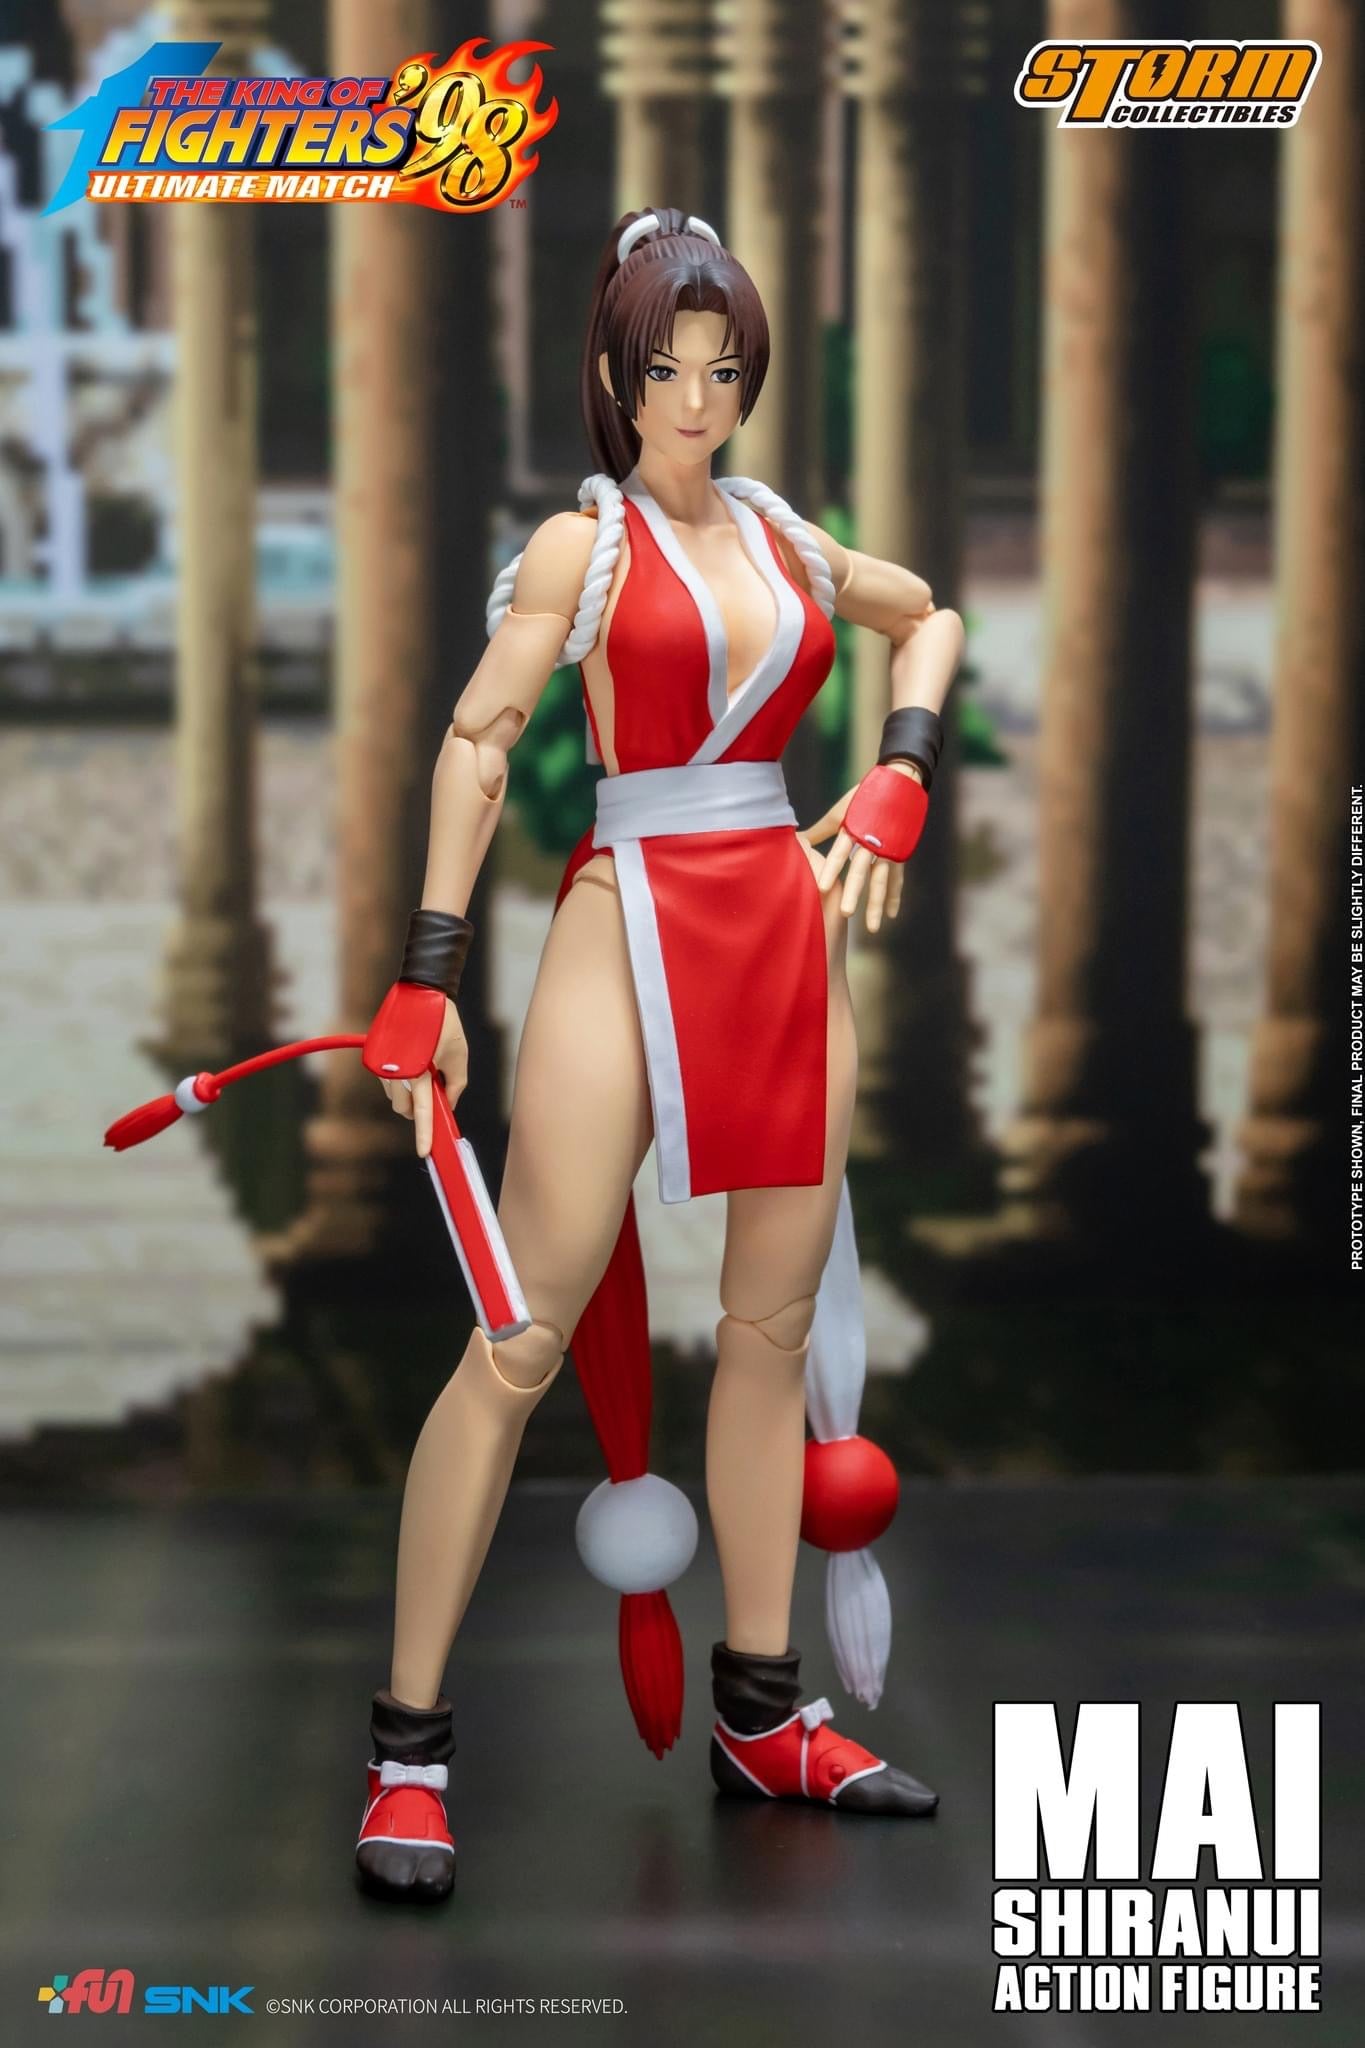 Pedido Figura Mai Shiranui - SNK The King of Fighters '98 Ultimate Match marca Storm Collectibles escala pequeña 1/12